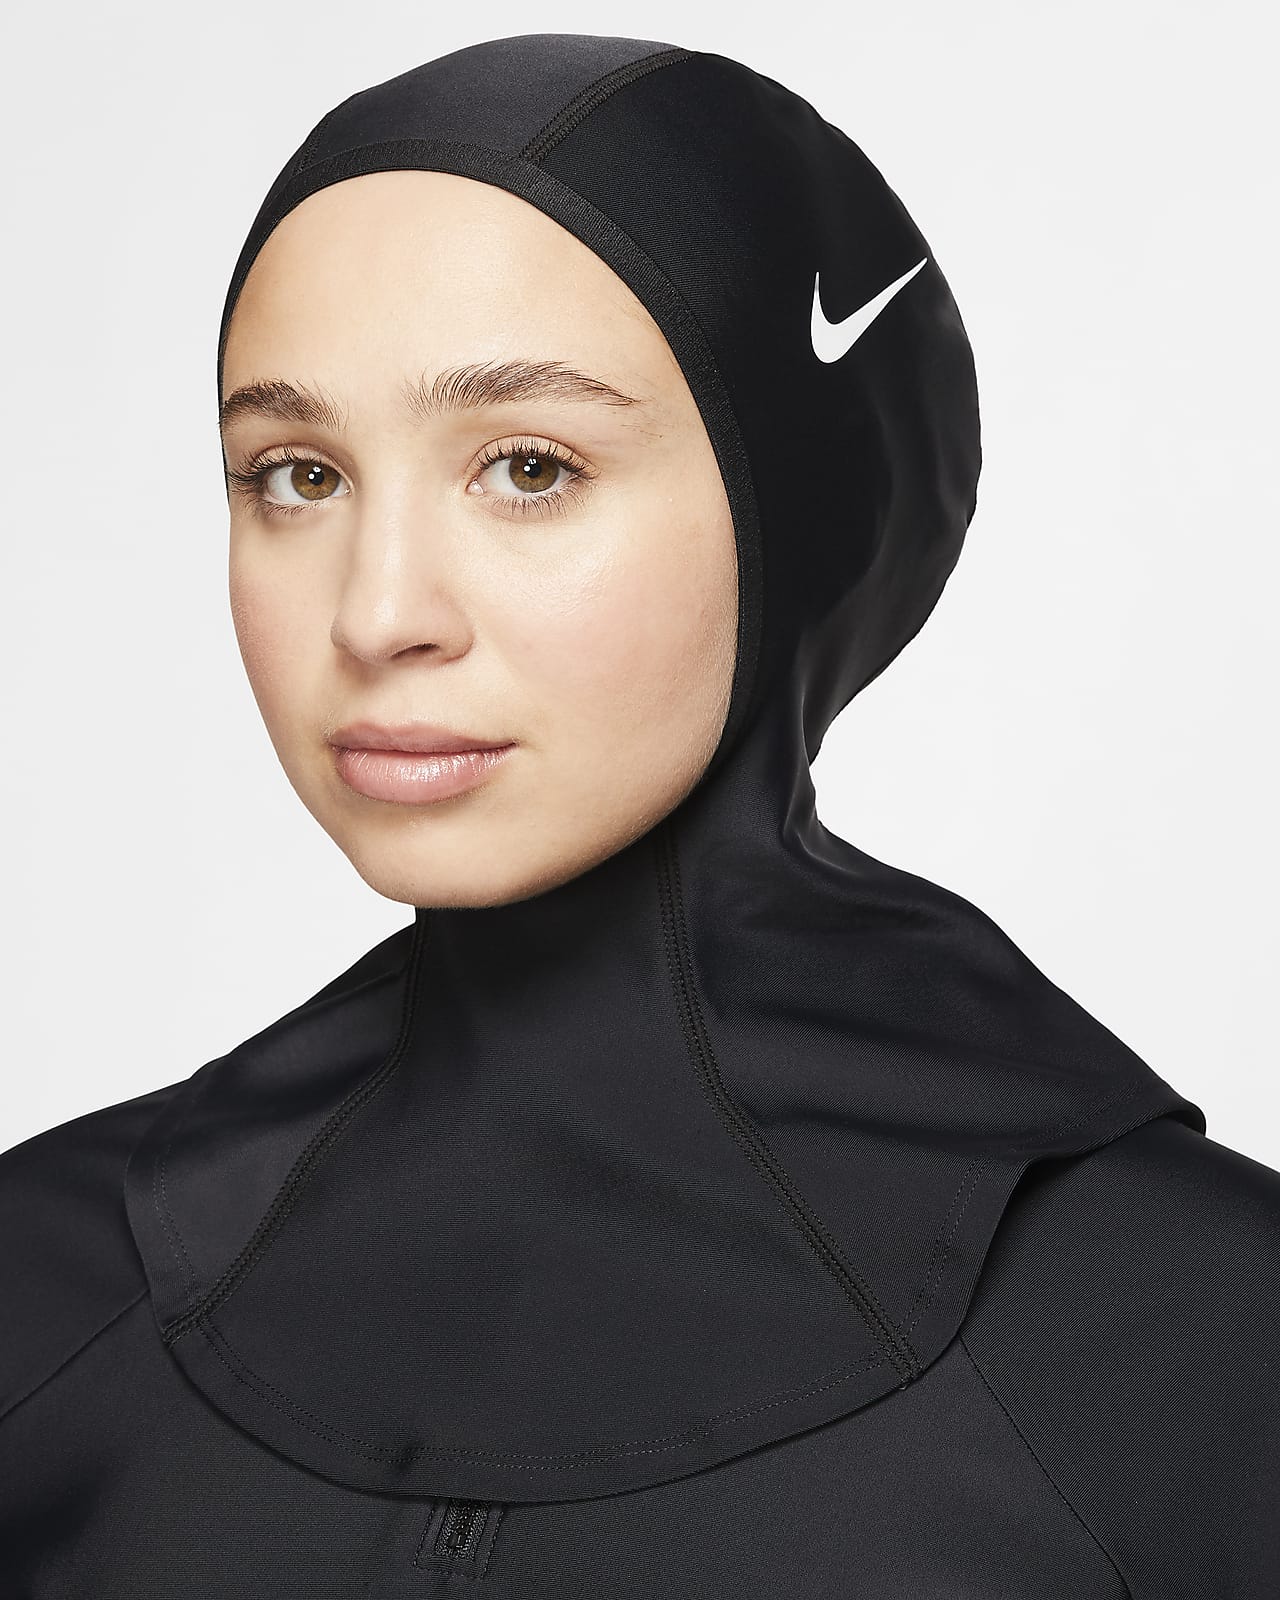 Bloesem De andere dag Aziatisch Nike Victory Women's Swim Hijab. Nike NL